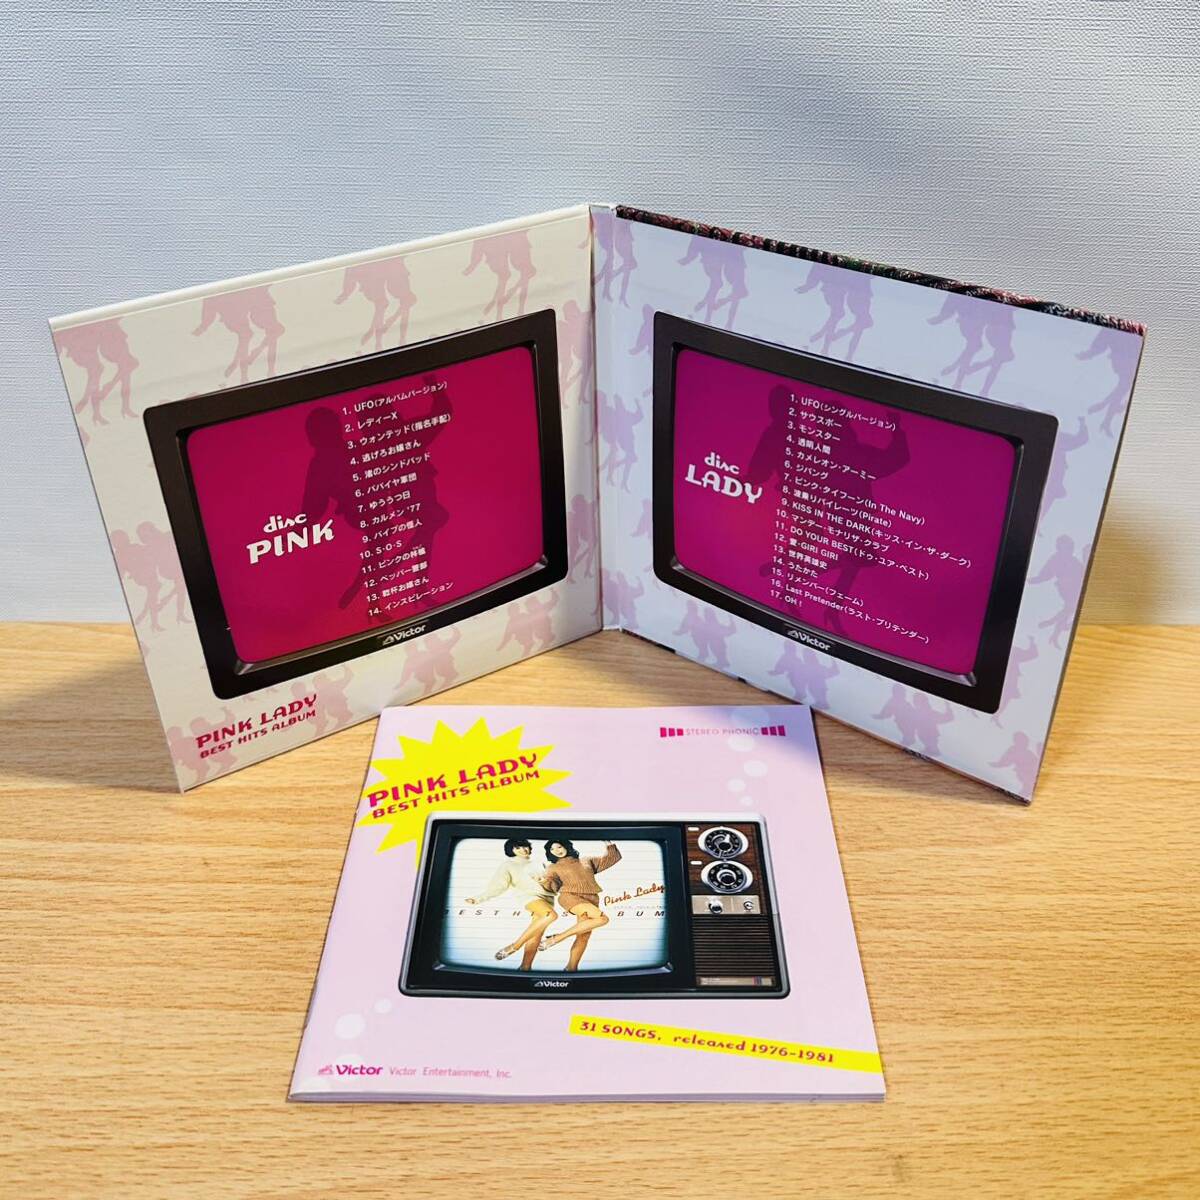 CD セル版 2枚組 紙ジャケ ピンクレディー ベストヒット アルバム _画像3